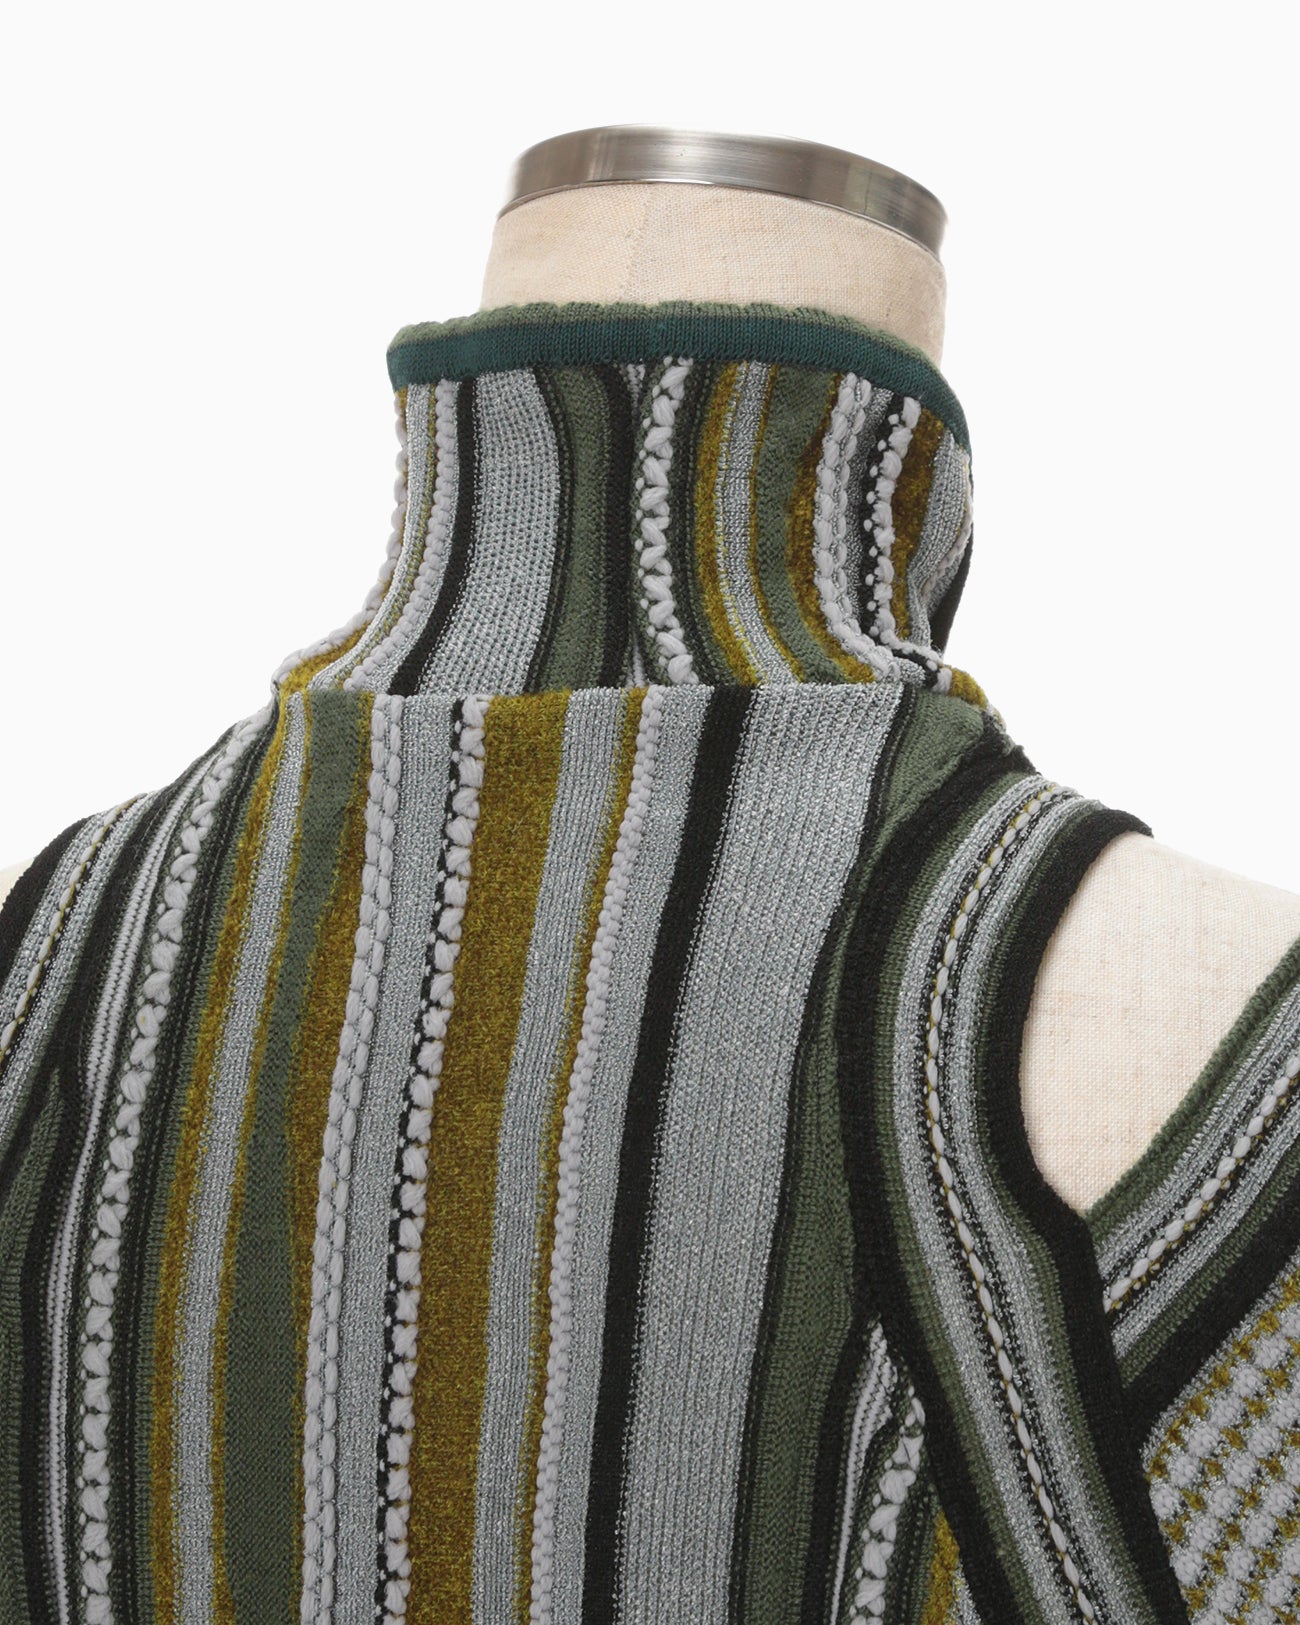 Stripe Jacquard High Neck Knitted Dress - khaki